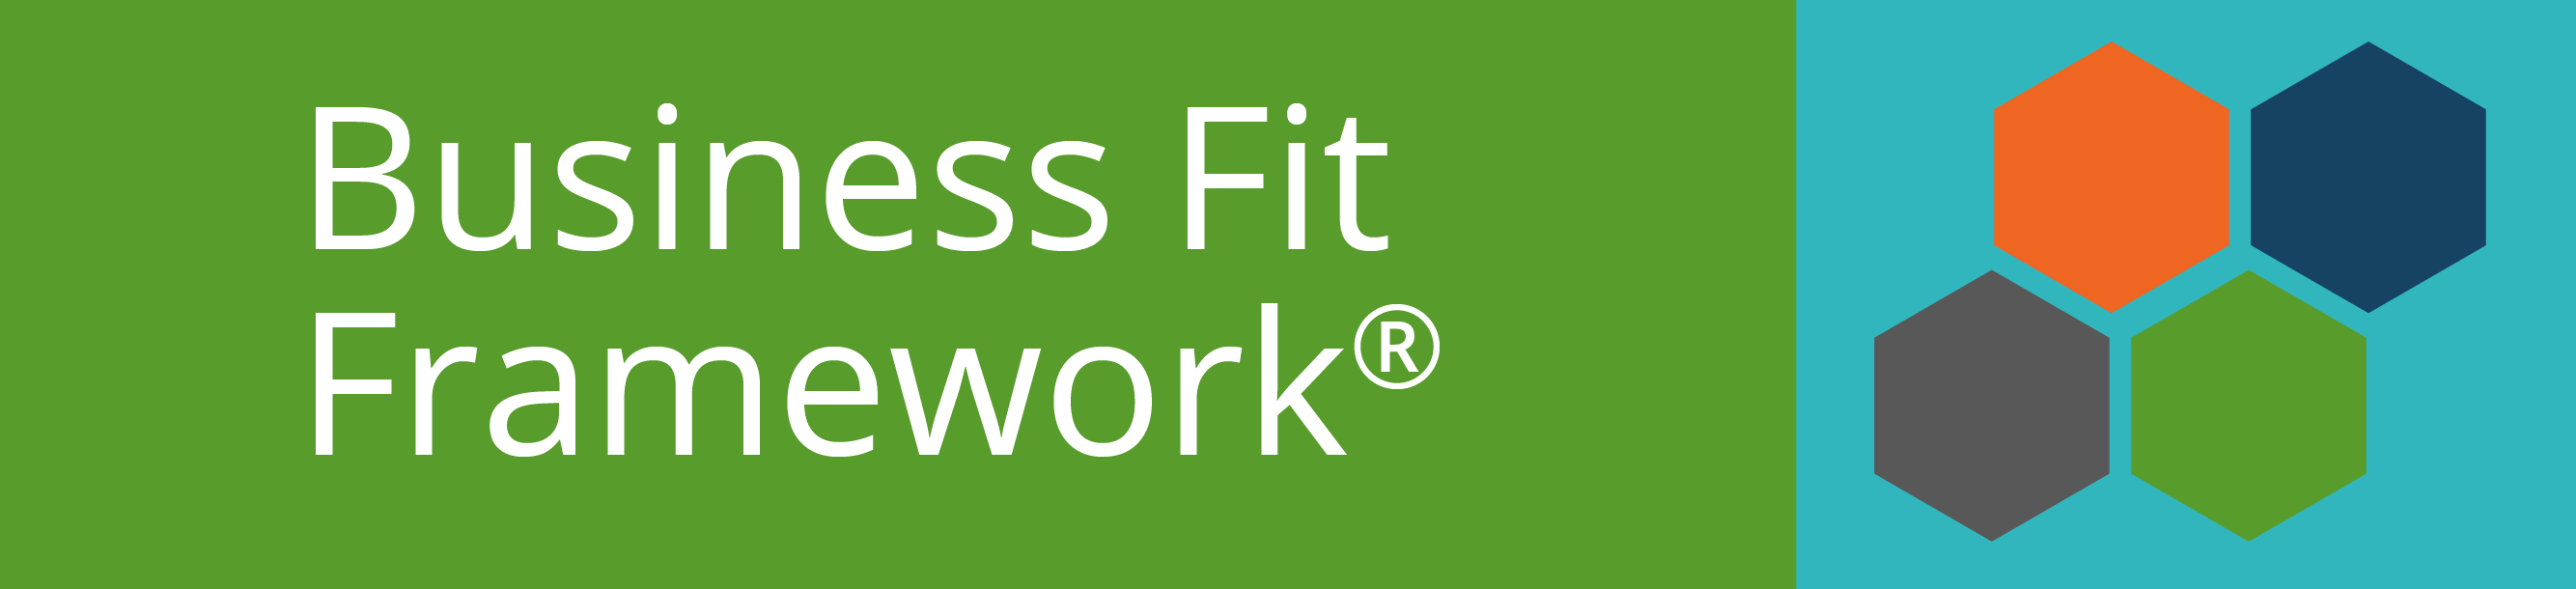 Business Fit Framework